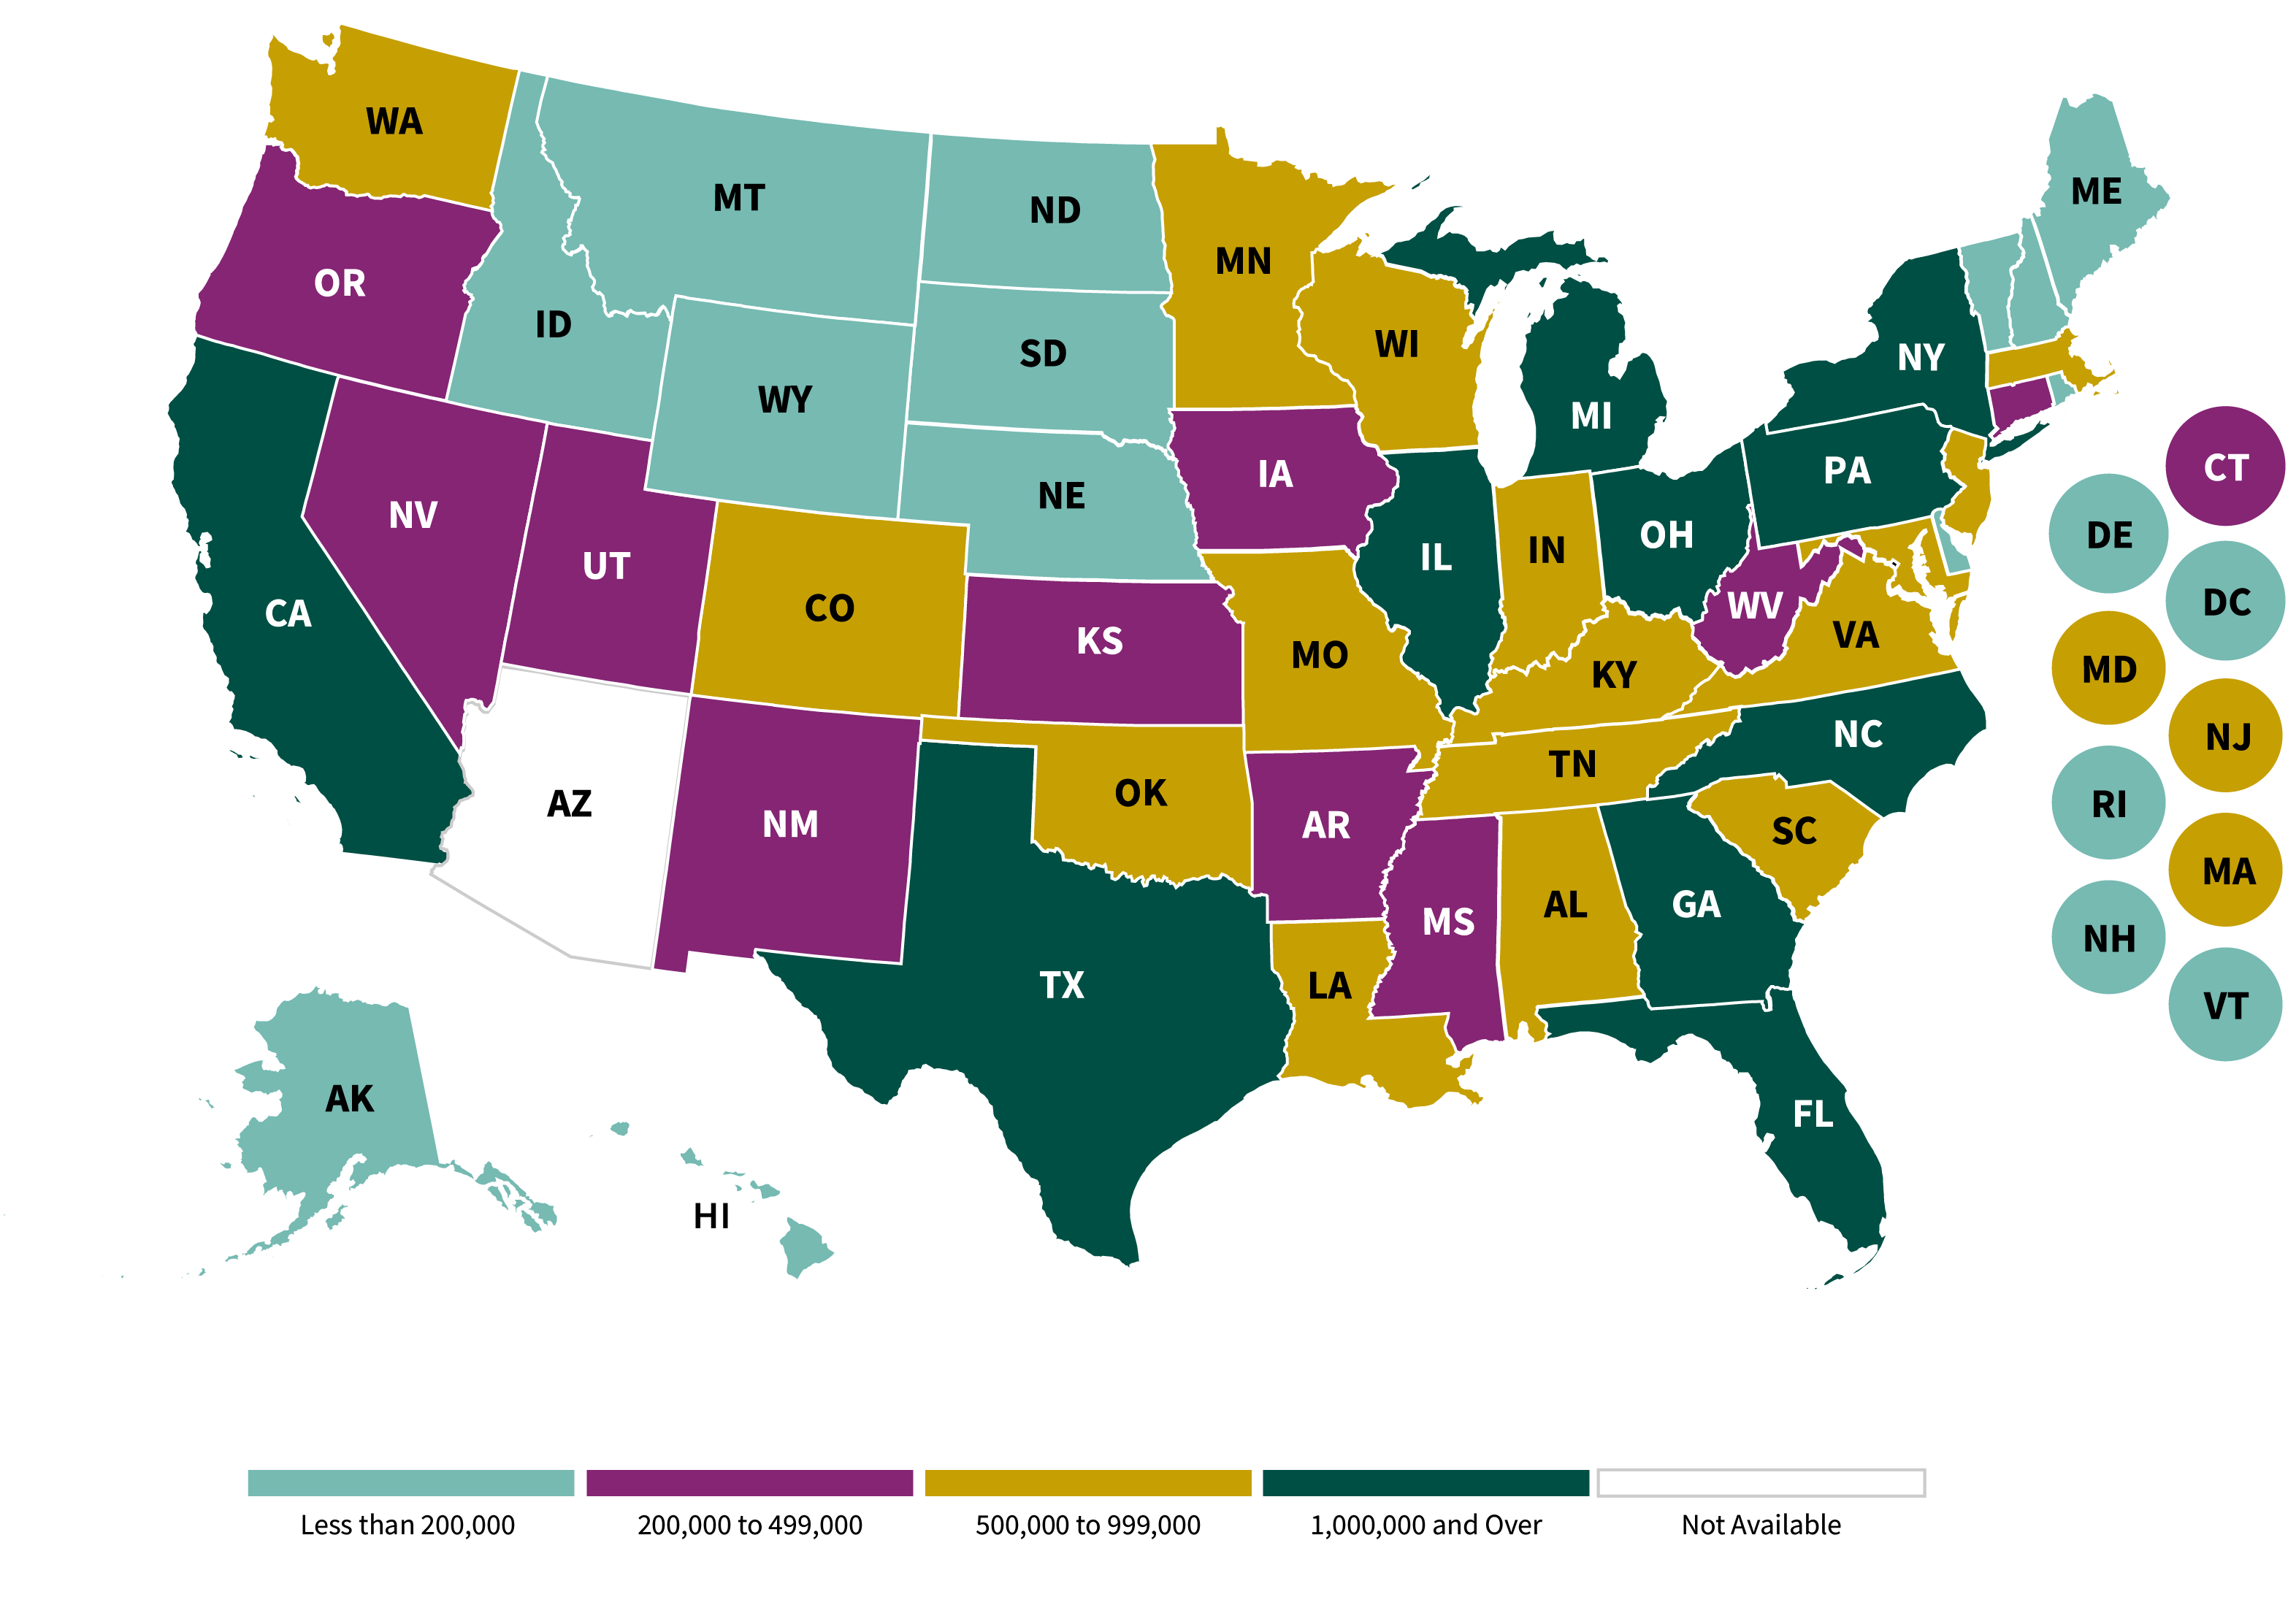 Medicaid-CHIP-Child-Enrollment-State